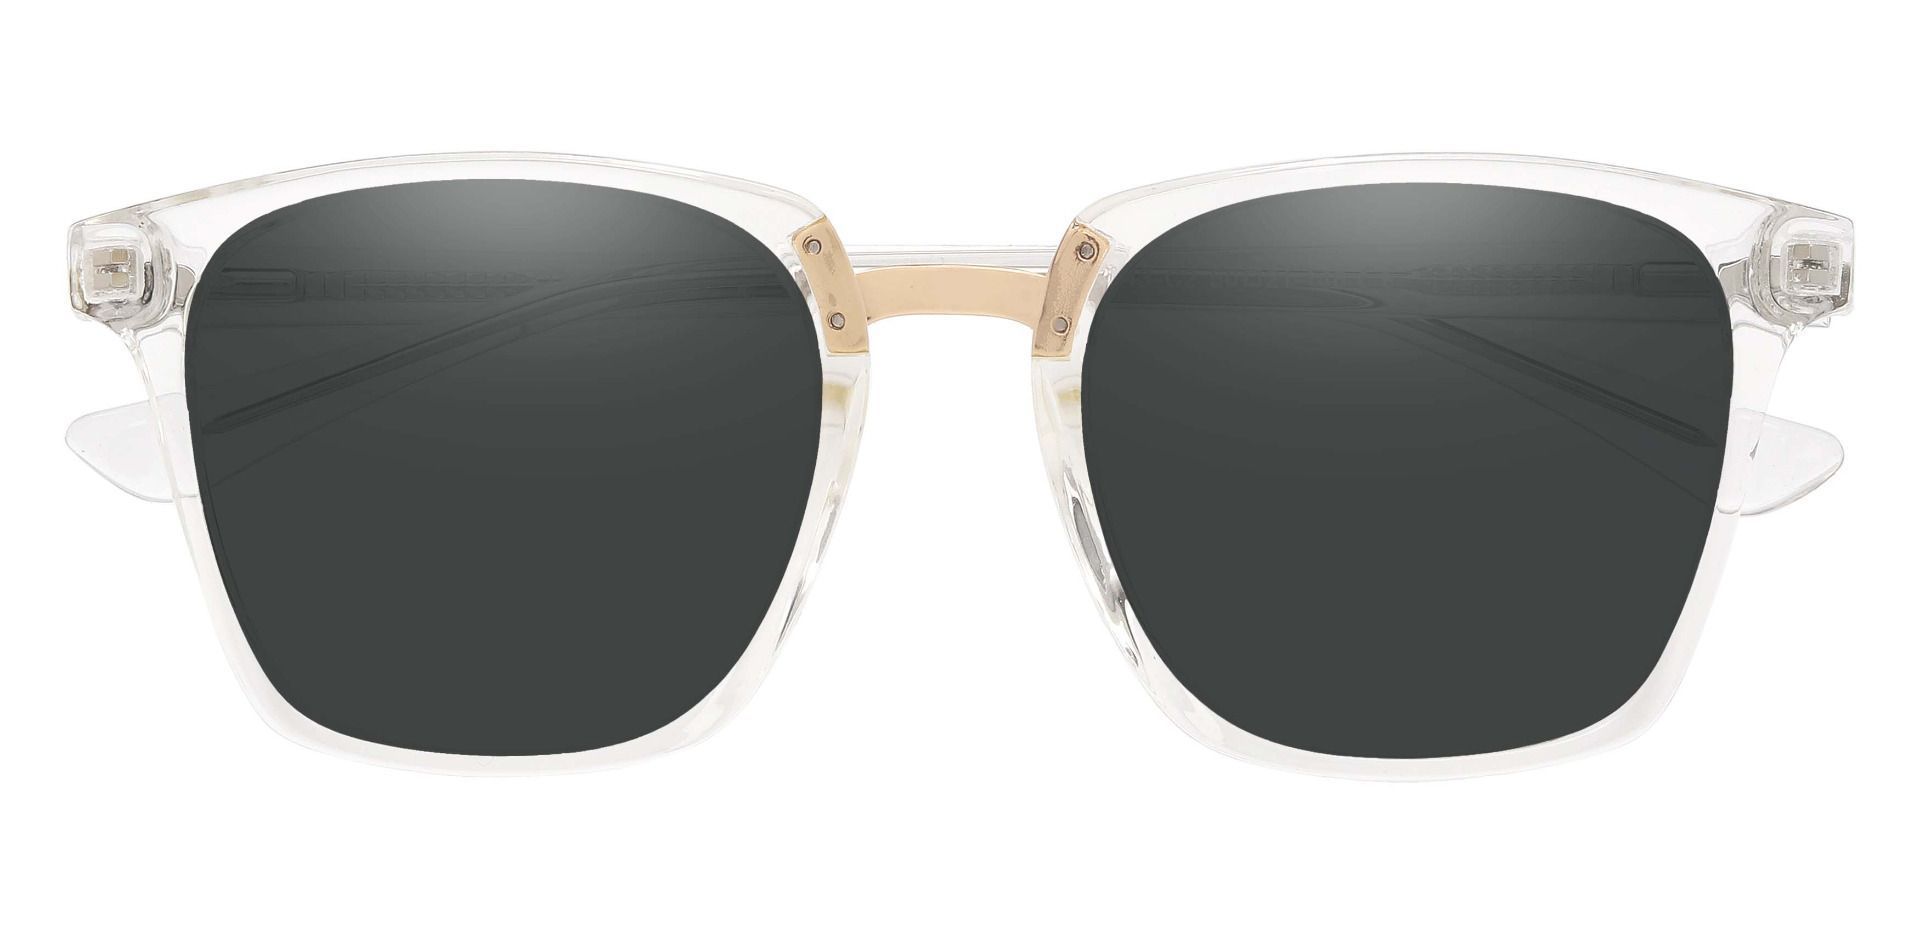 Delta Square Non-Rx Sunglasses - Clear Frame With Gray Lenses